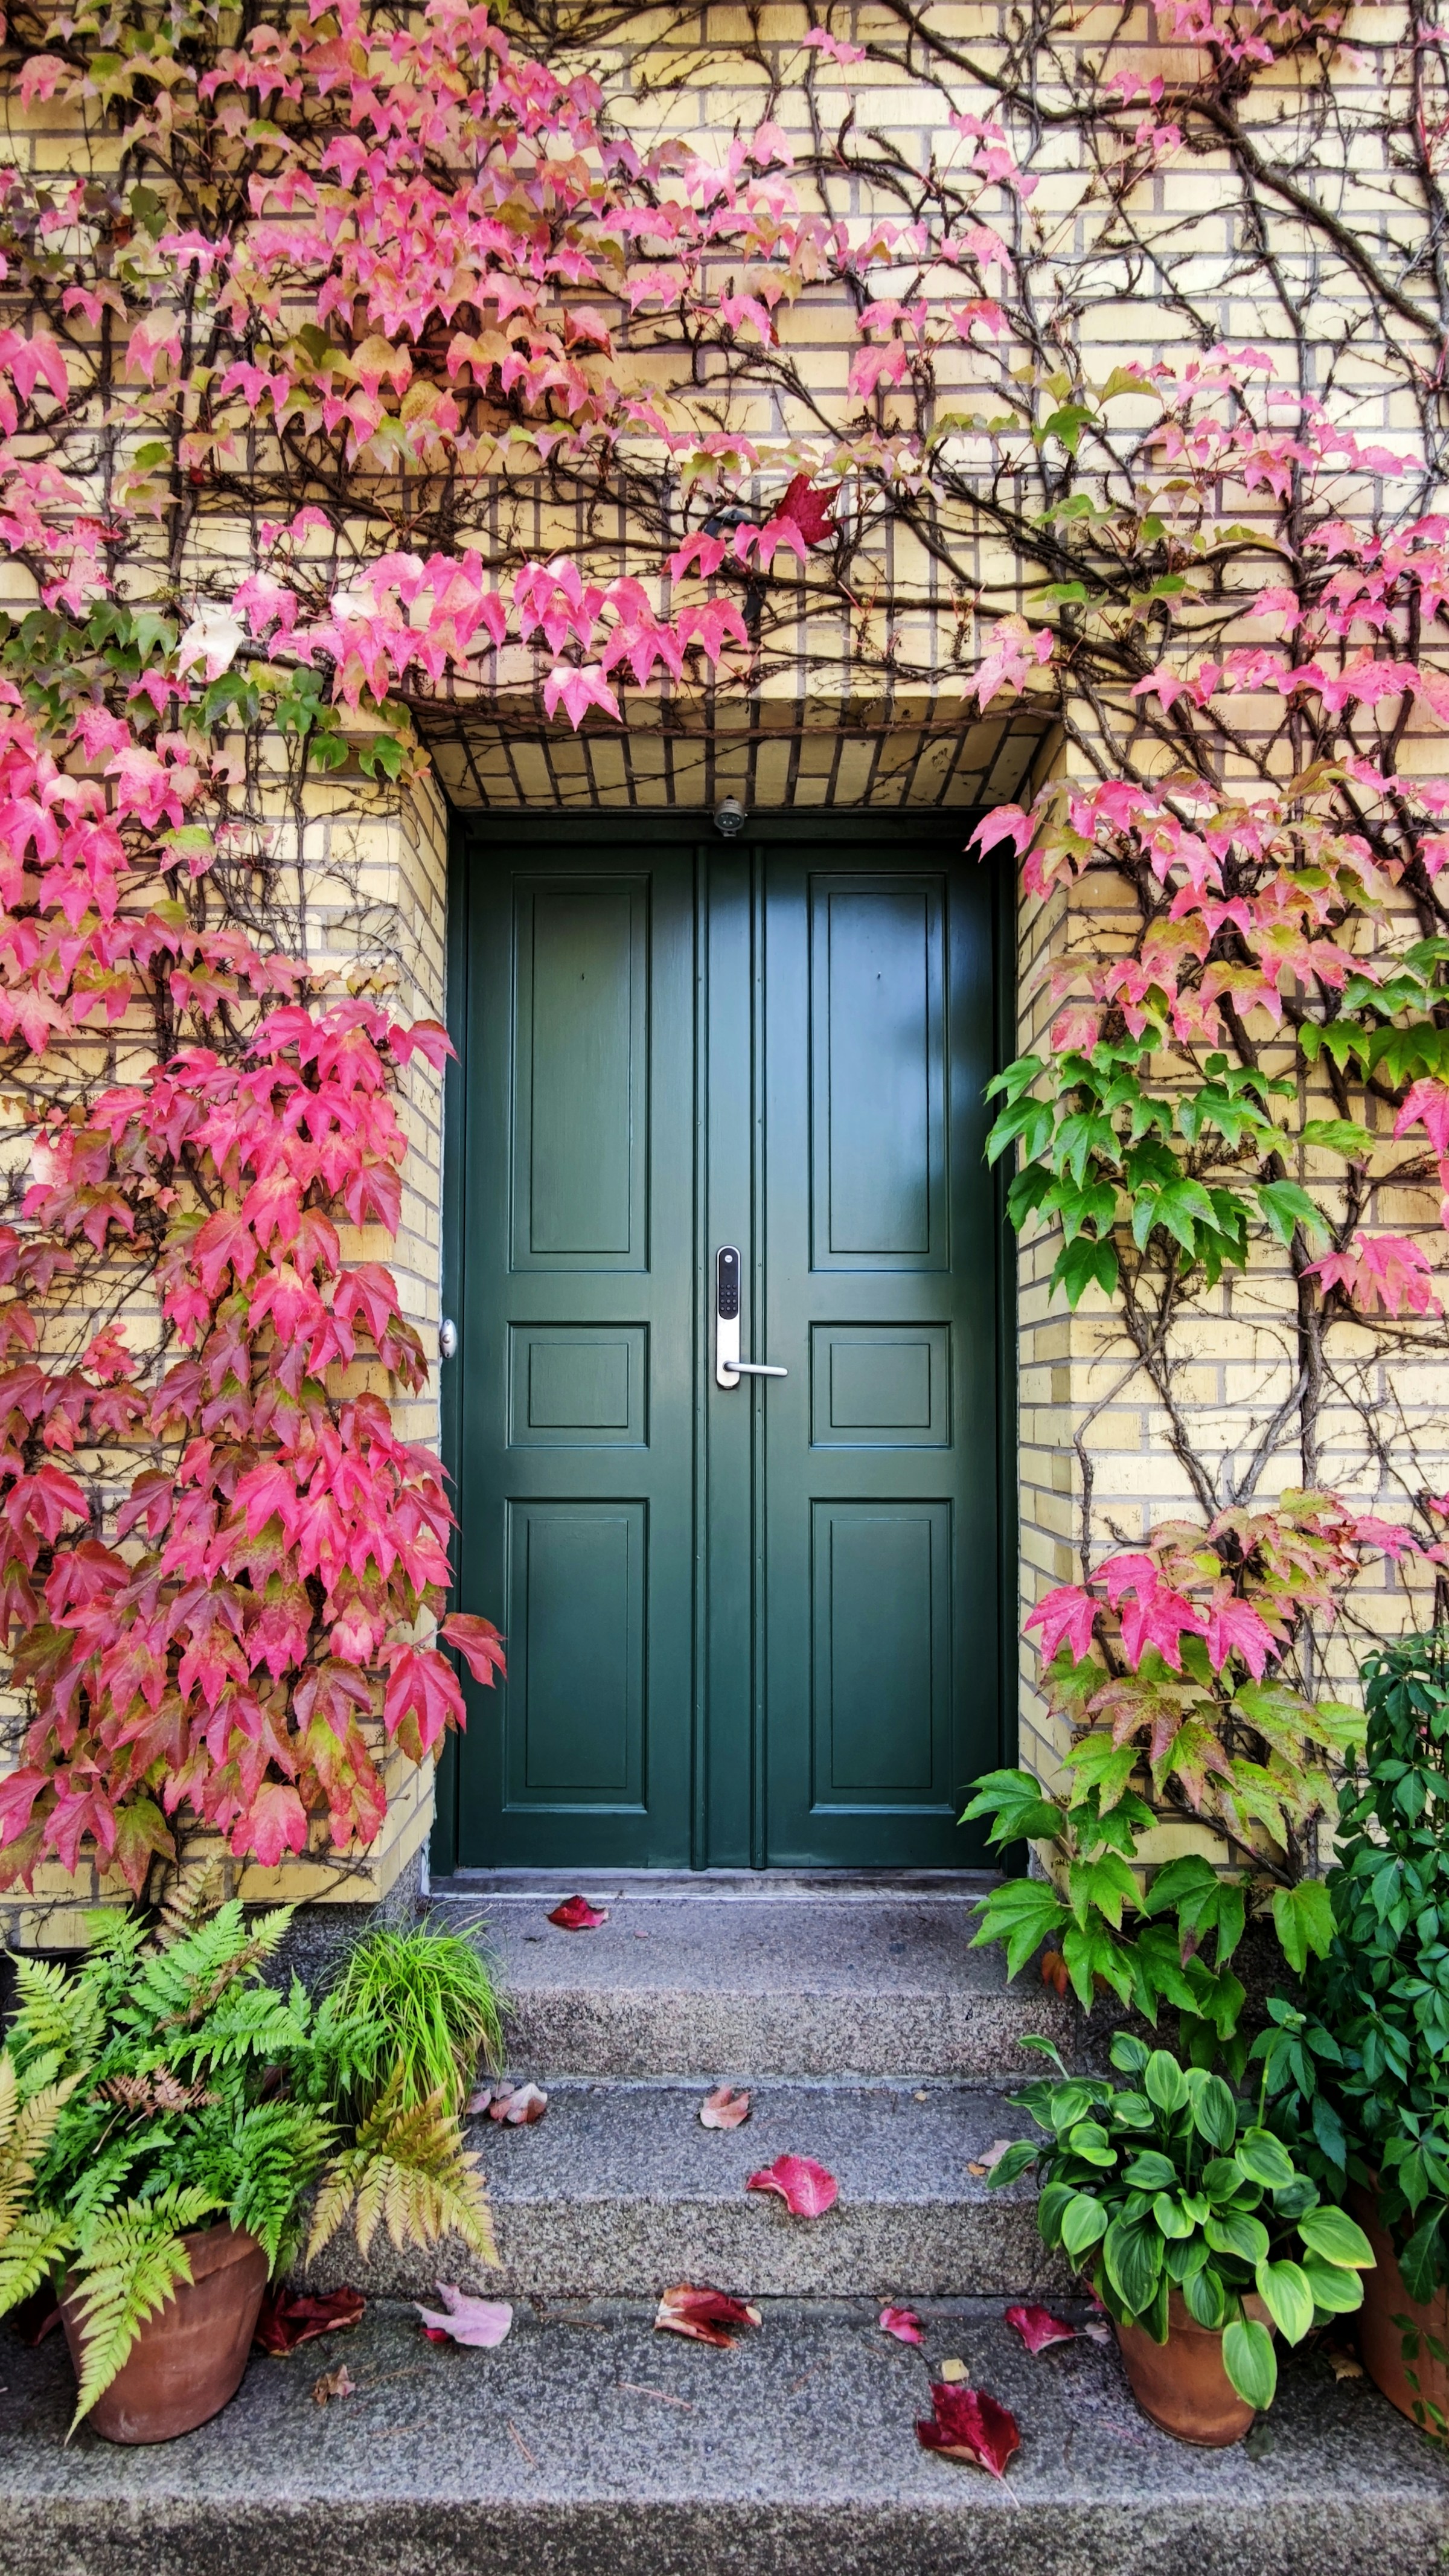 The front door of a house | Source: Unsplash